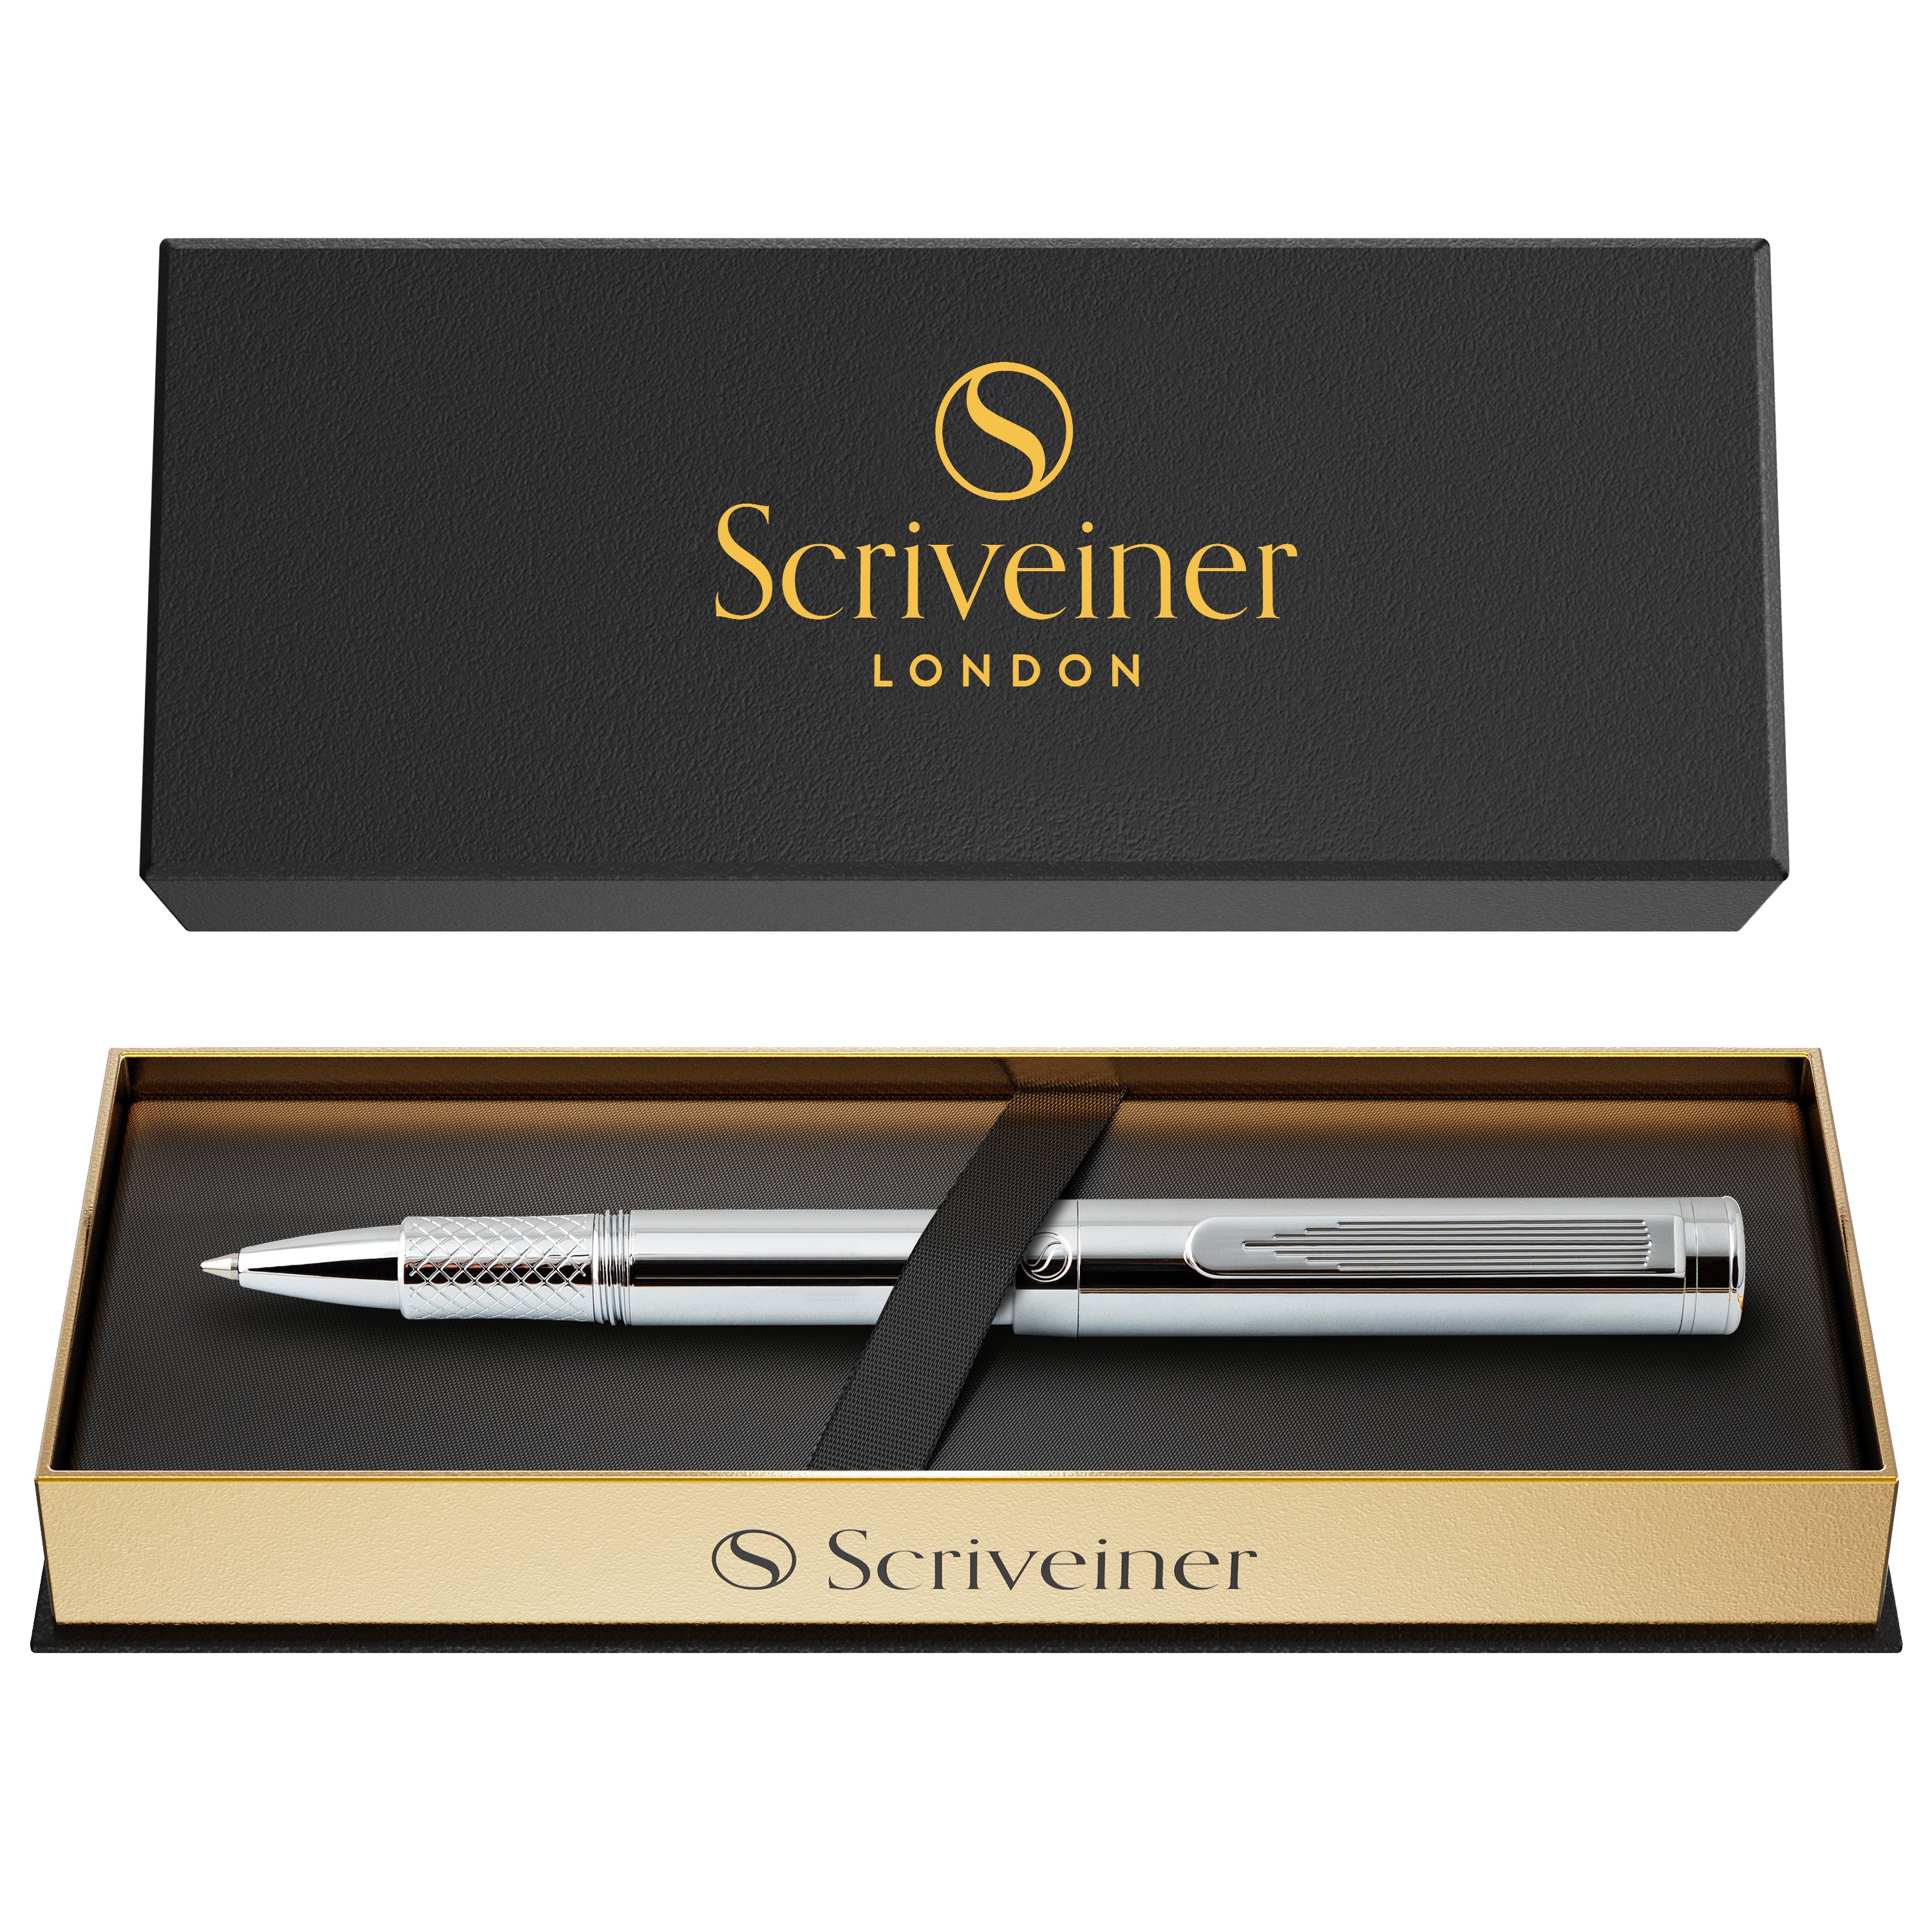 Scriveiner Silver Chrome Rollerball, Award Winning Luxury Pen, Heavy Pocket Pen with Chrome Finish, German Schmidt Refill, Best